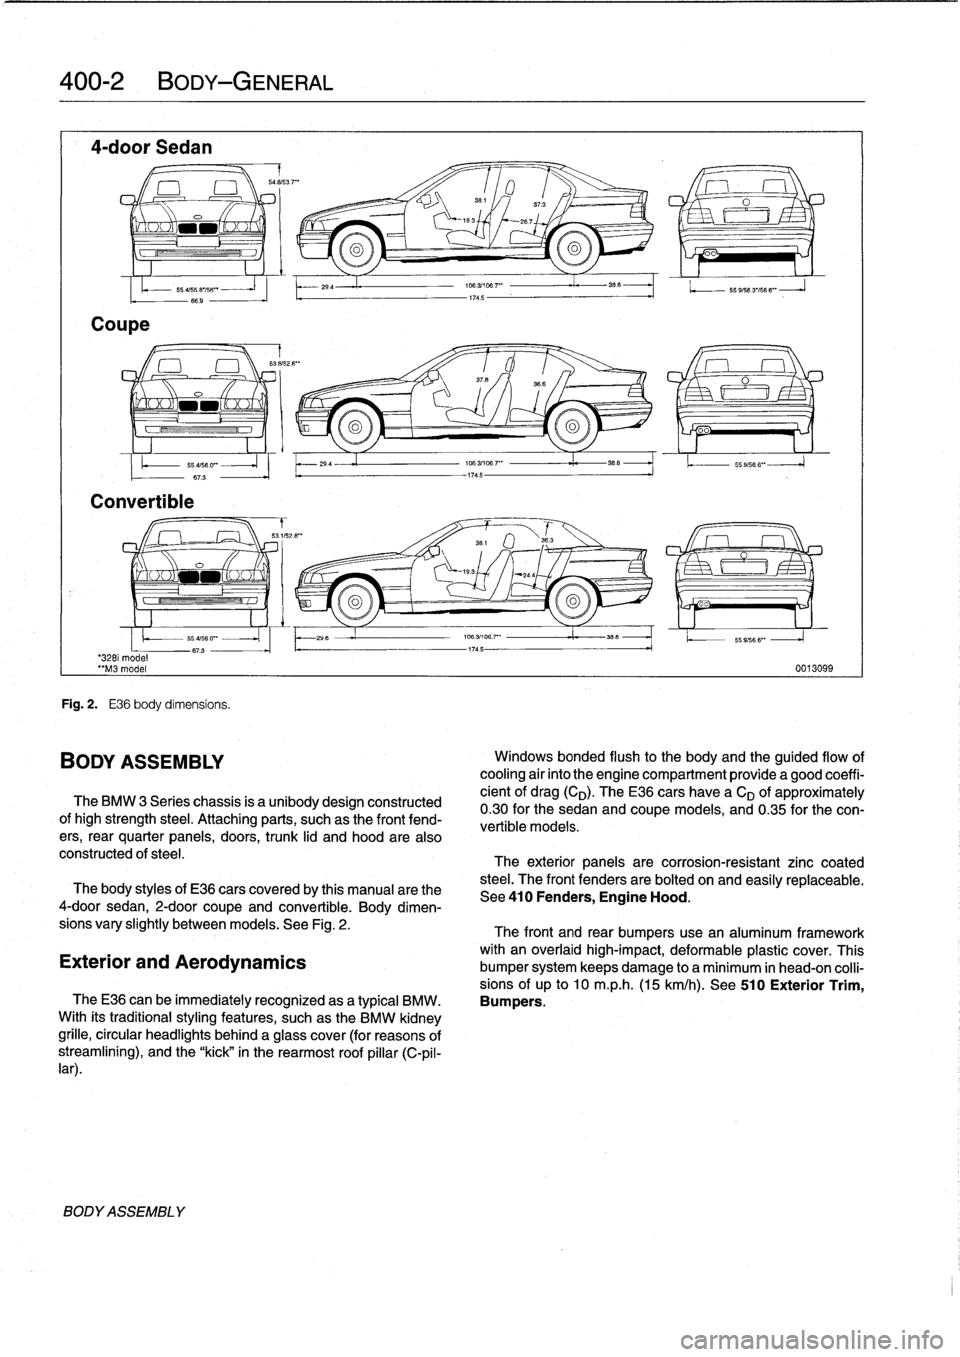 BMW 318i 1997 E36 Workshop Manual 
400-2
BODY-GENERAL

4-door
Sedan

Coupe

-
saas3
.7""

351
/

	

37
.3
O

	

I
x
`-193

	

267

o
oa

3281
model
"M3
model

Convertible

BODYASSEMBLY

55
ass
.e
iss
""
-
66
.9
-

Fig
.
2
.

	

E36
b